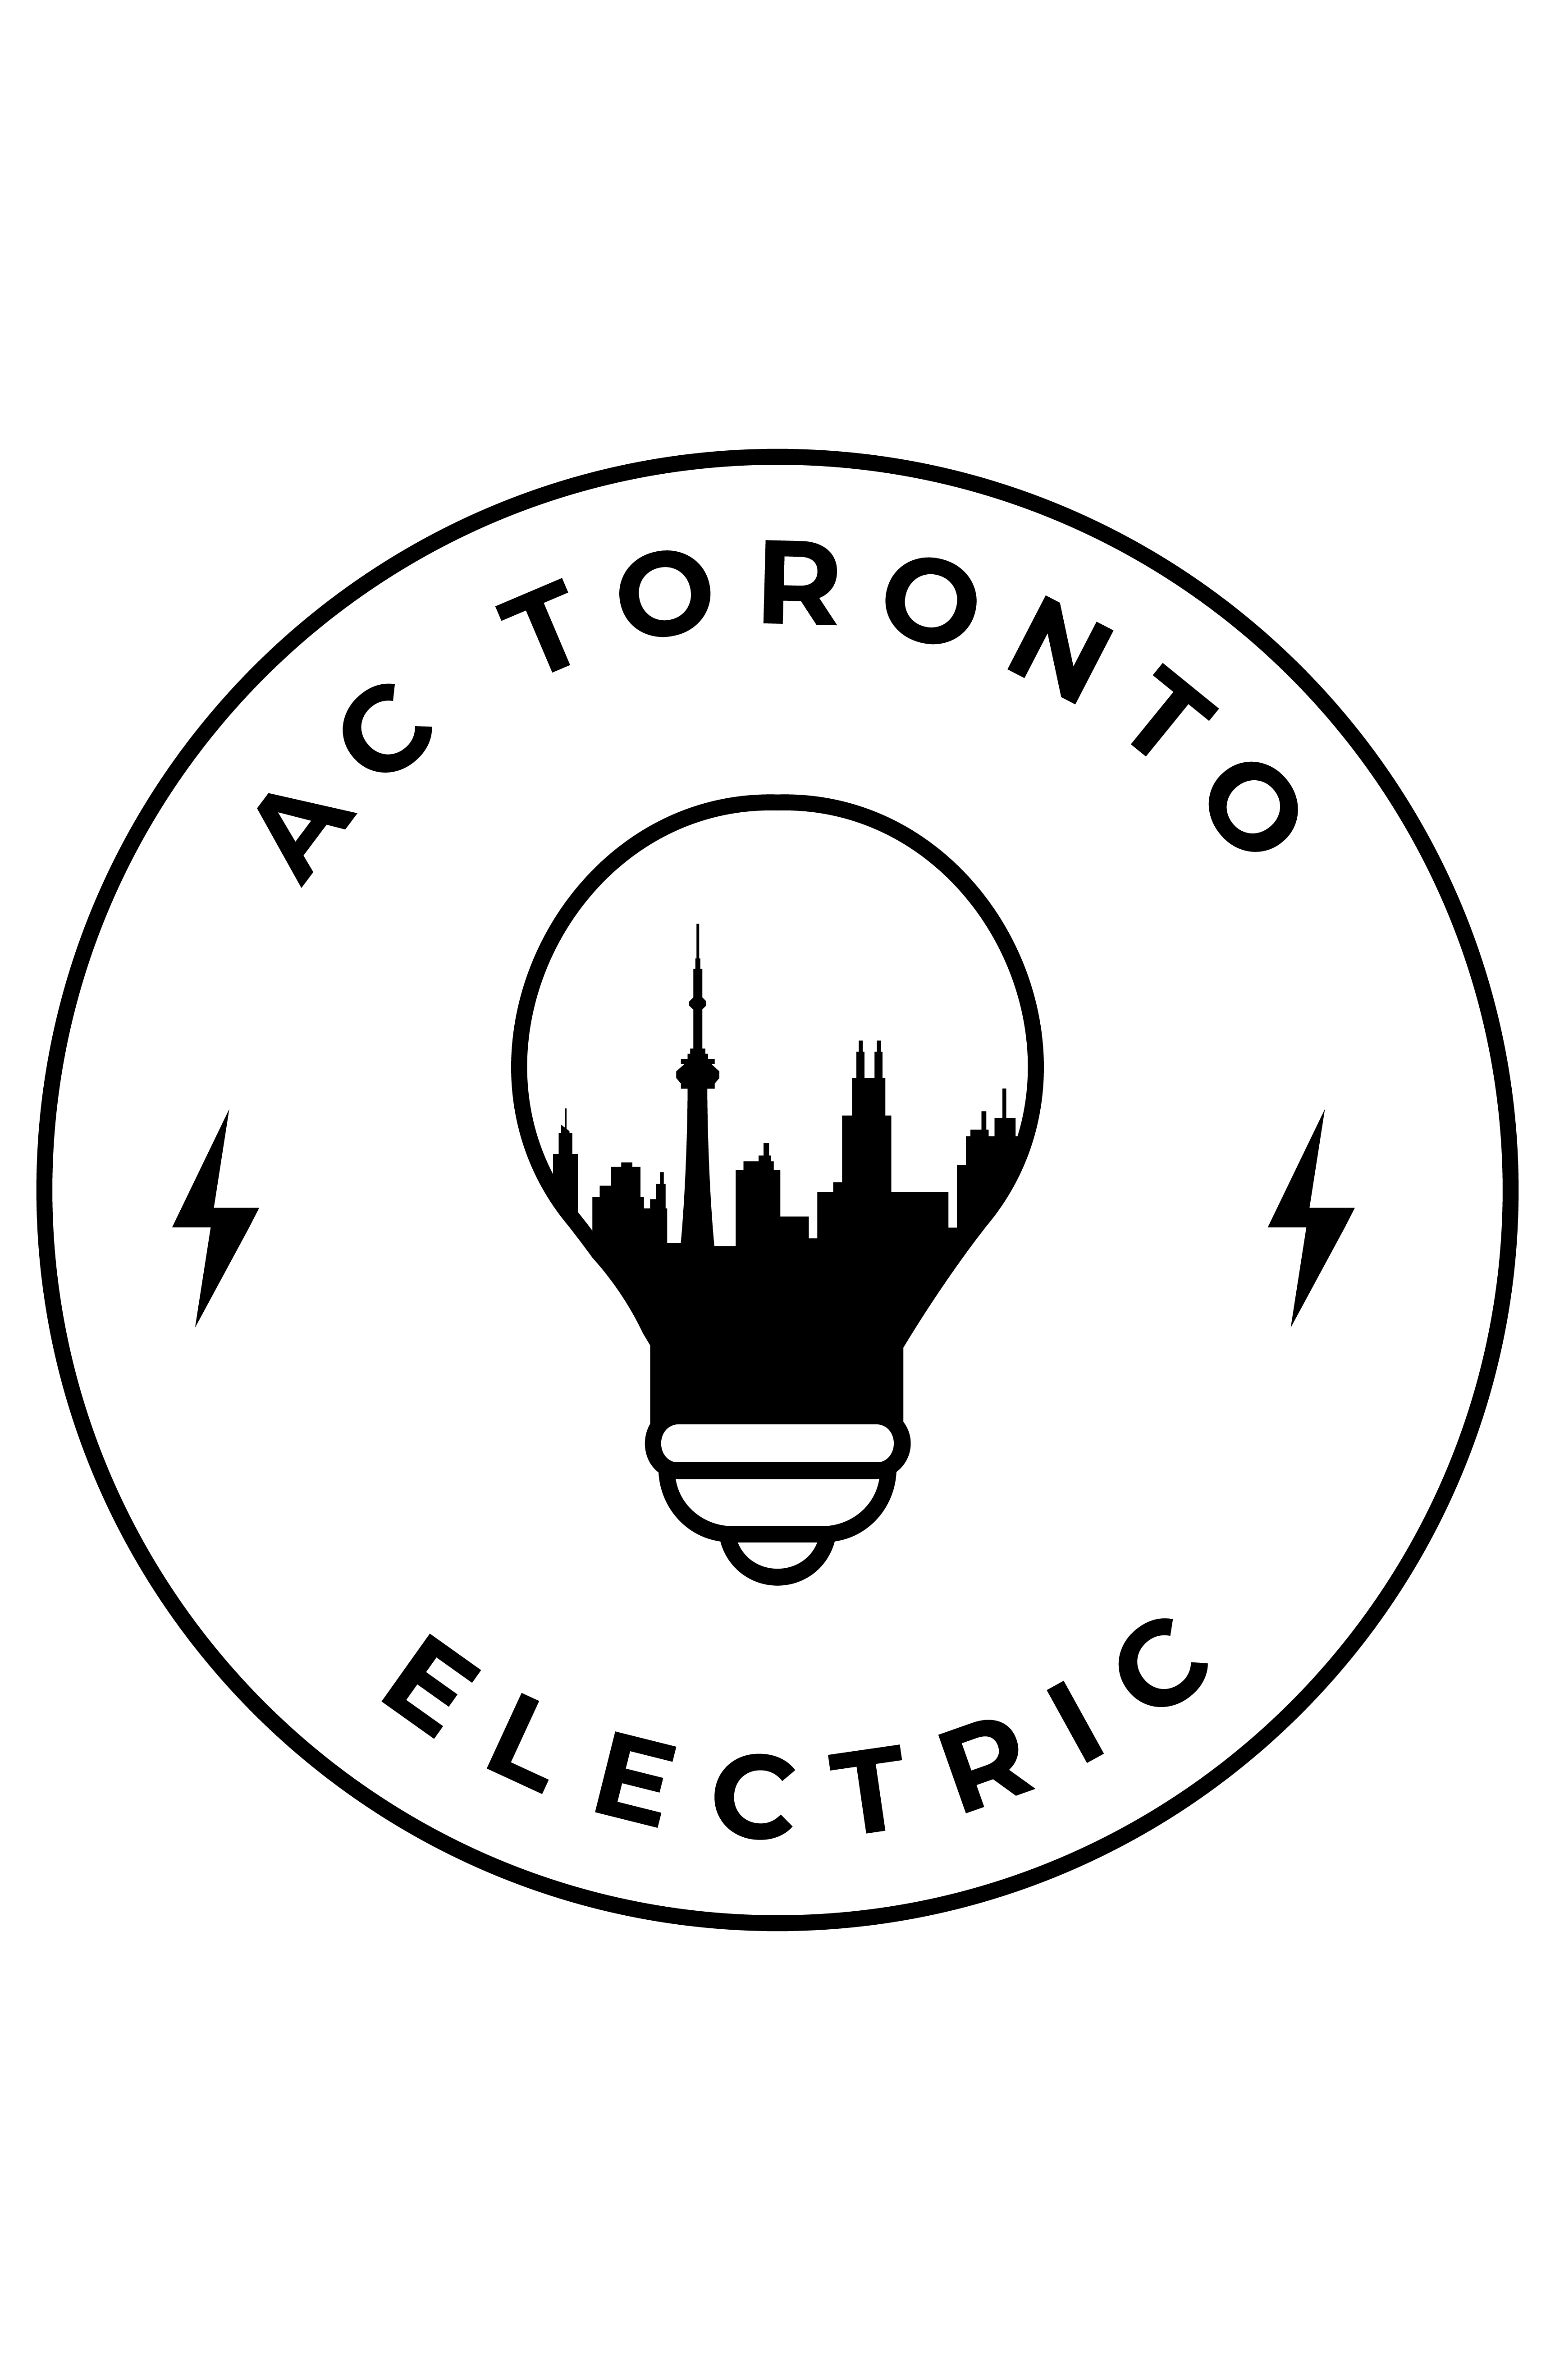 AC Toronto Electric's logo